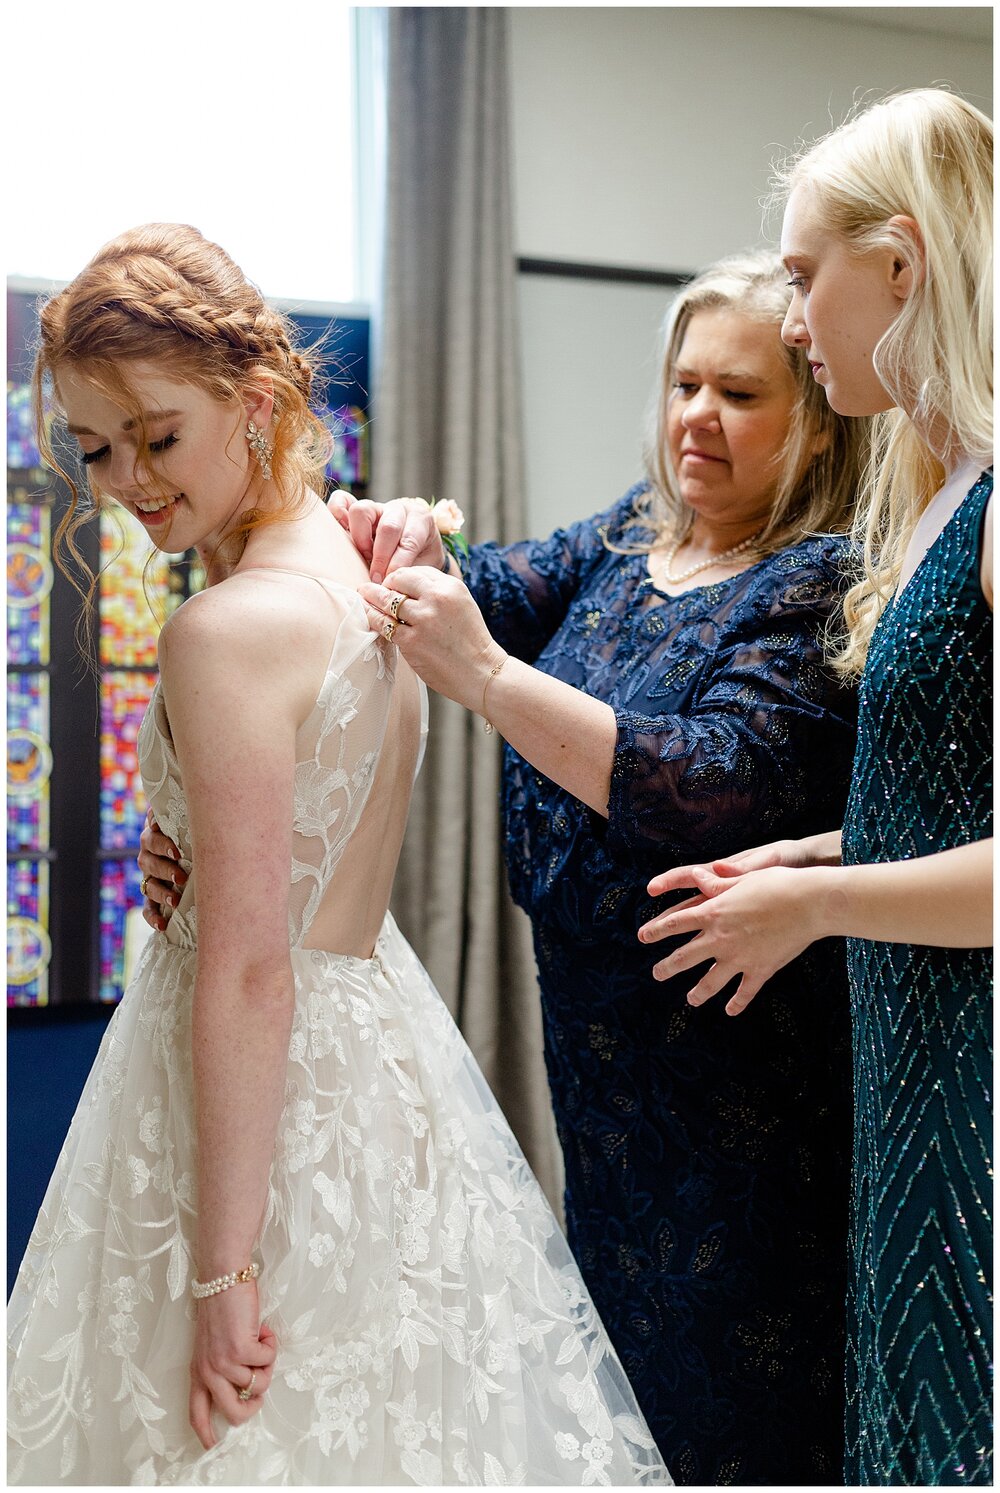 buttoning the wedding dress